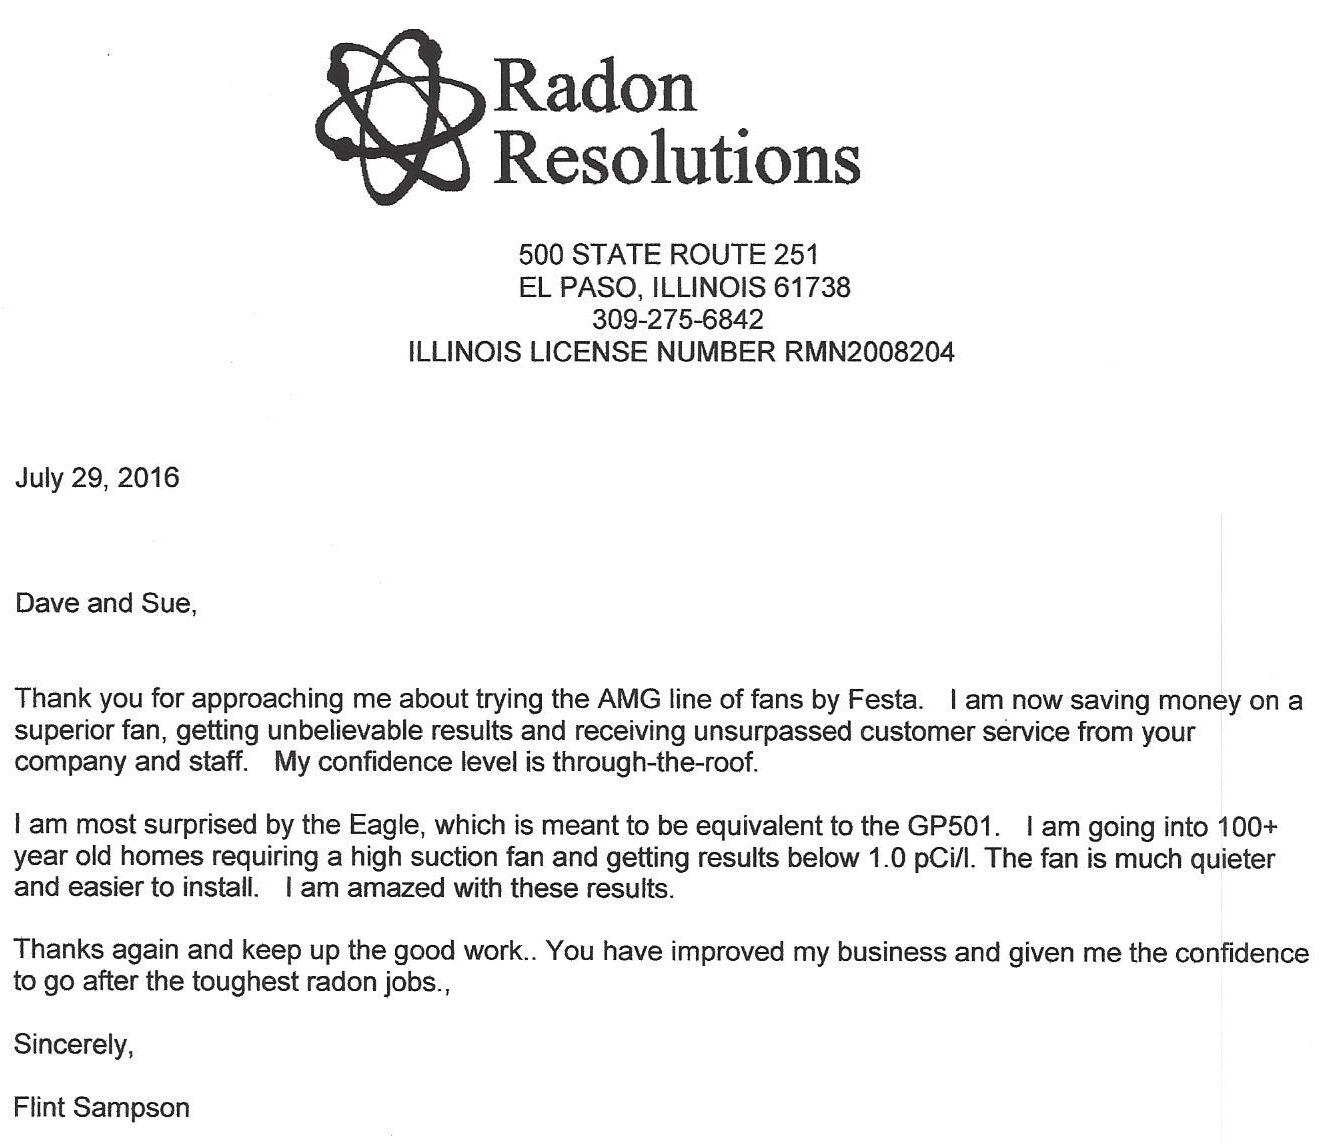 Radon Resolutions Testimonial